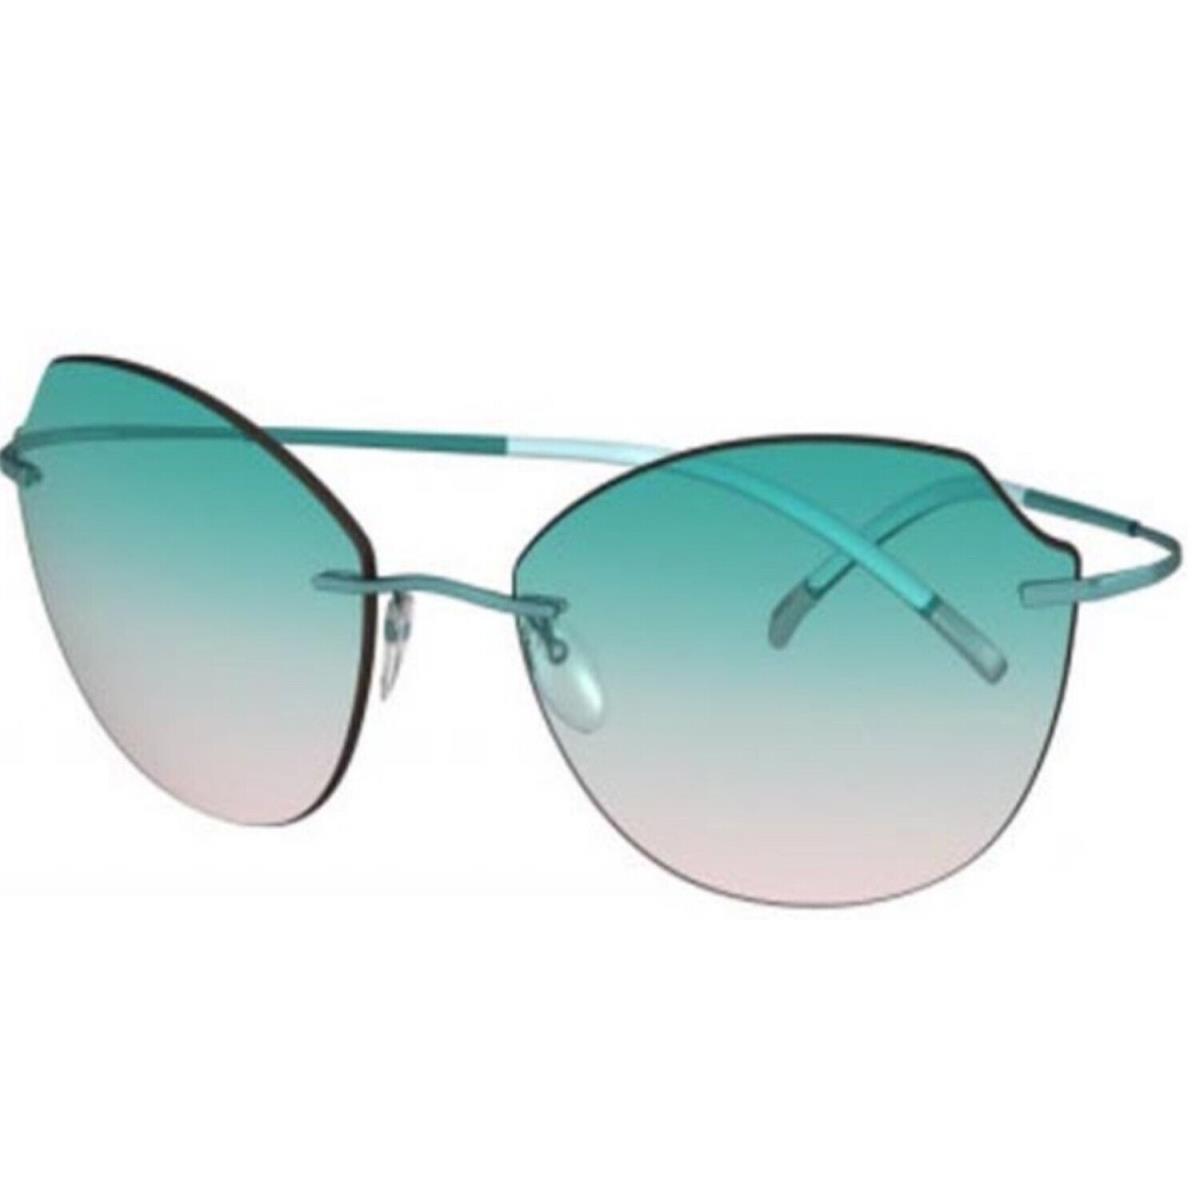 Silhouette Sunglasses Wachau 60/17/140 Teal Rose Gradient 8158-75-5040